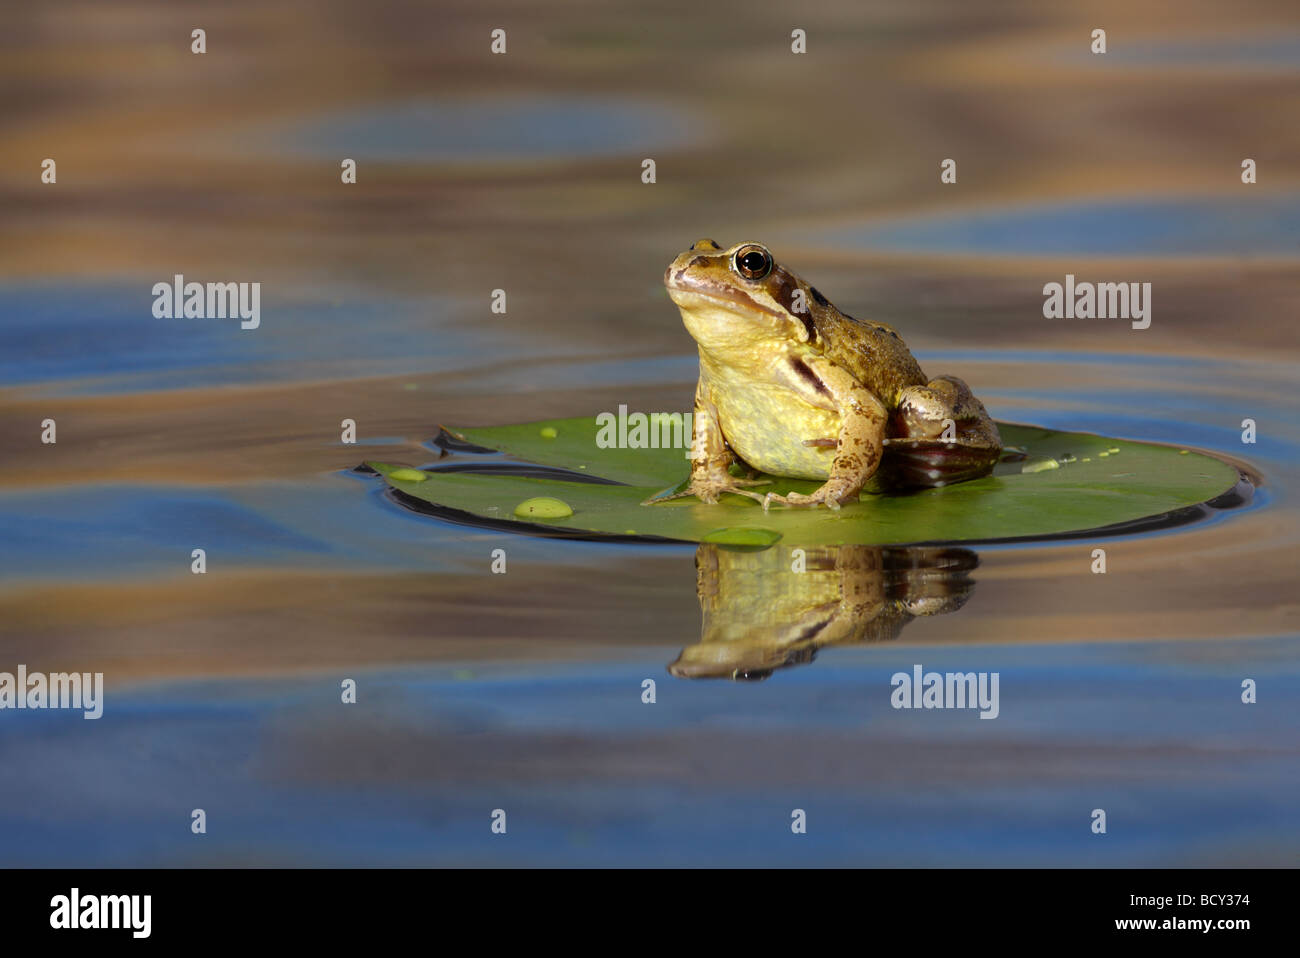 Common Frog  Rana temporaria with reflection Stock Photo